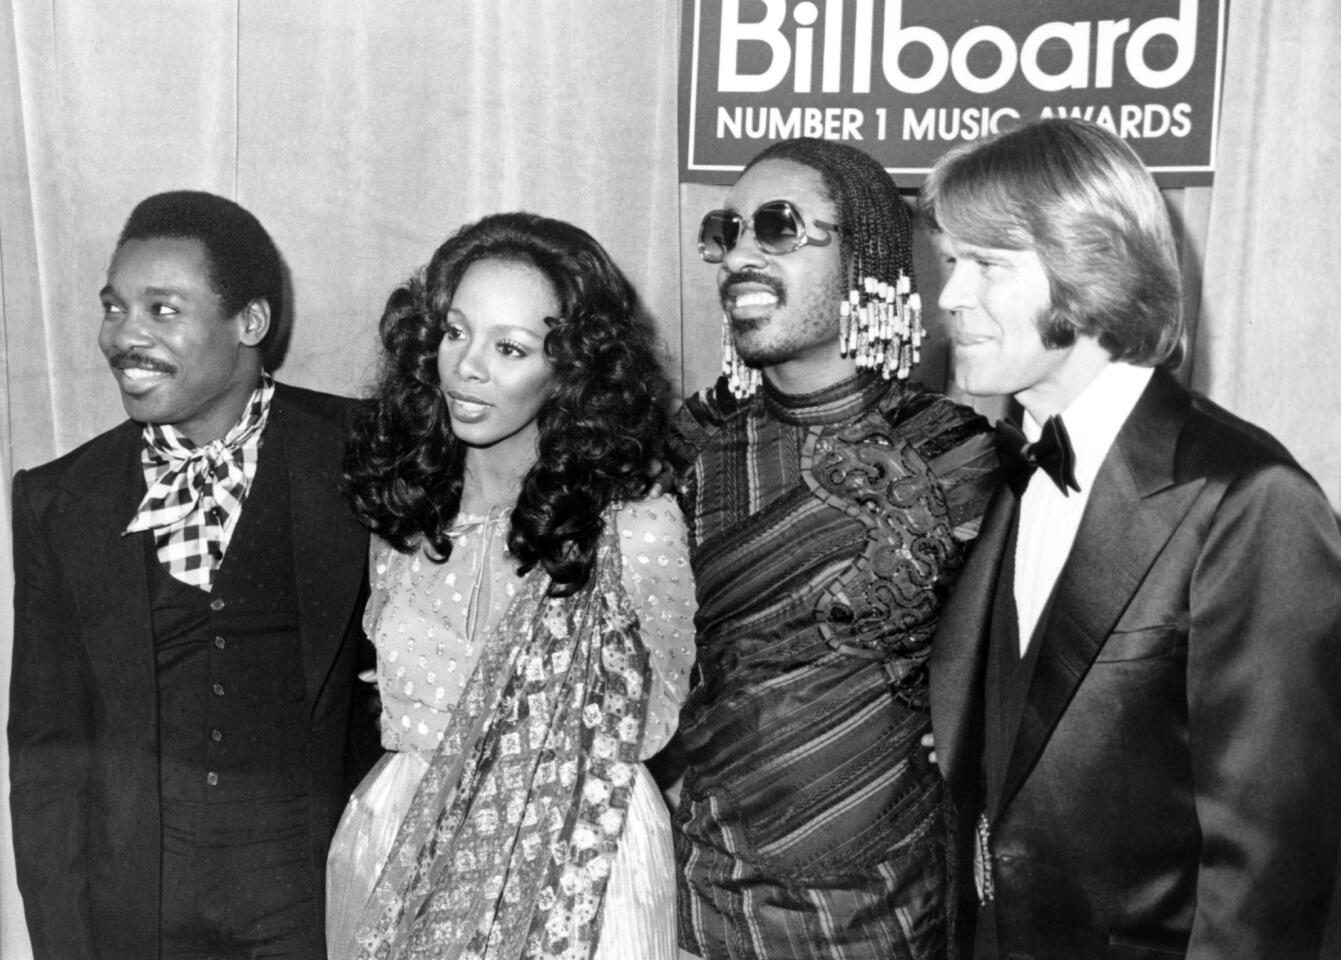 George Benson, left, Donna Summer, Stevie Wonder and Glen Campbell attend the 1980 "Billboard Number 1 Music Awards."